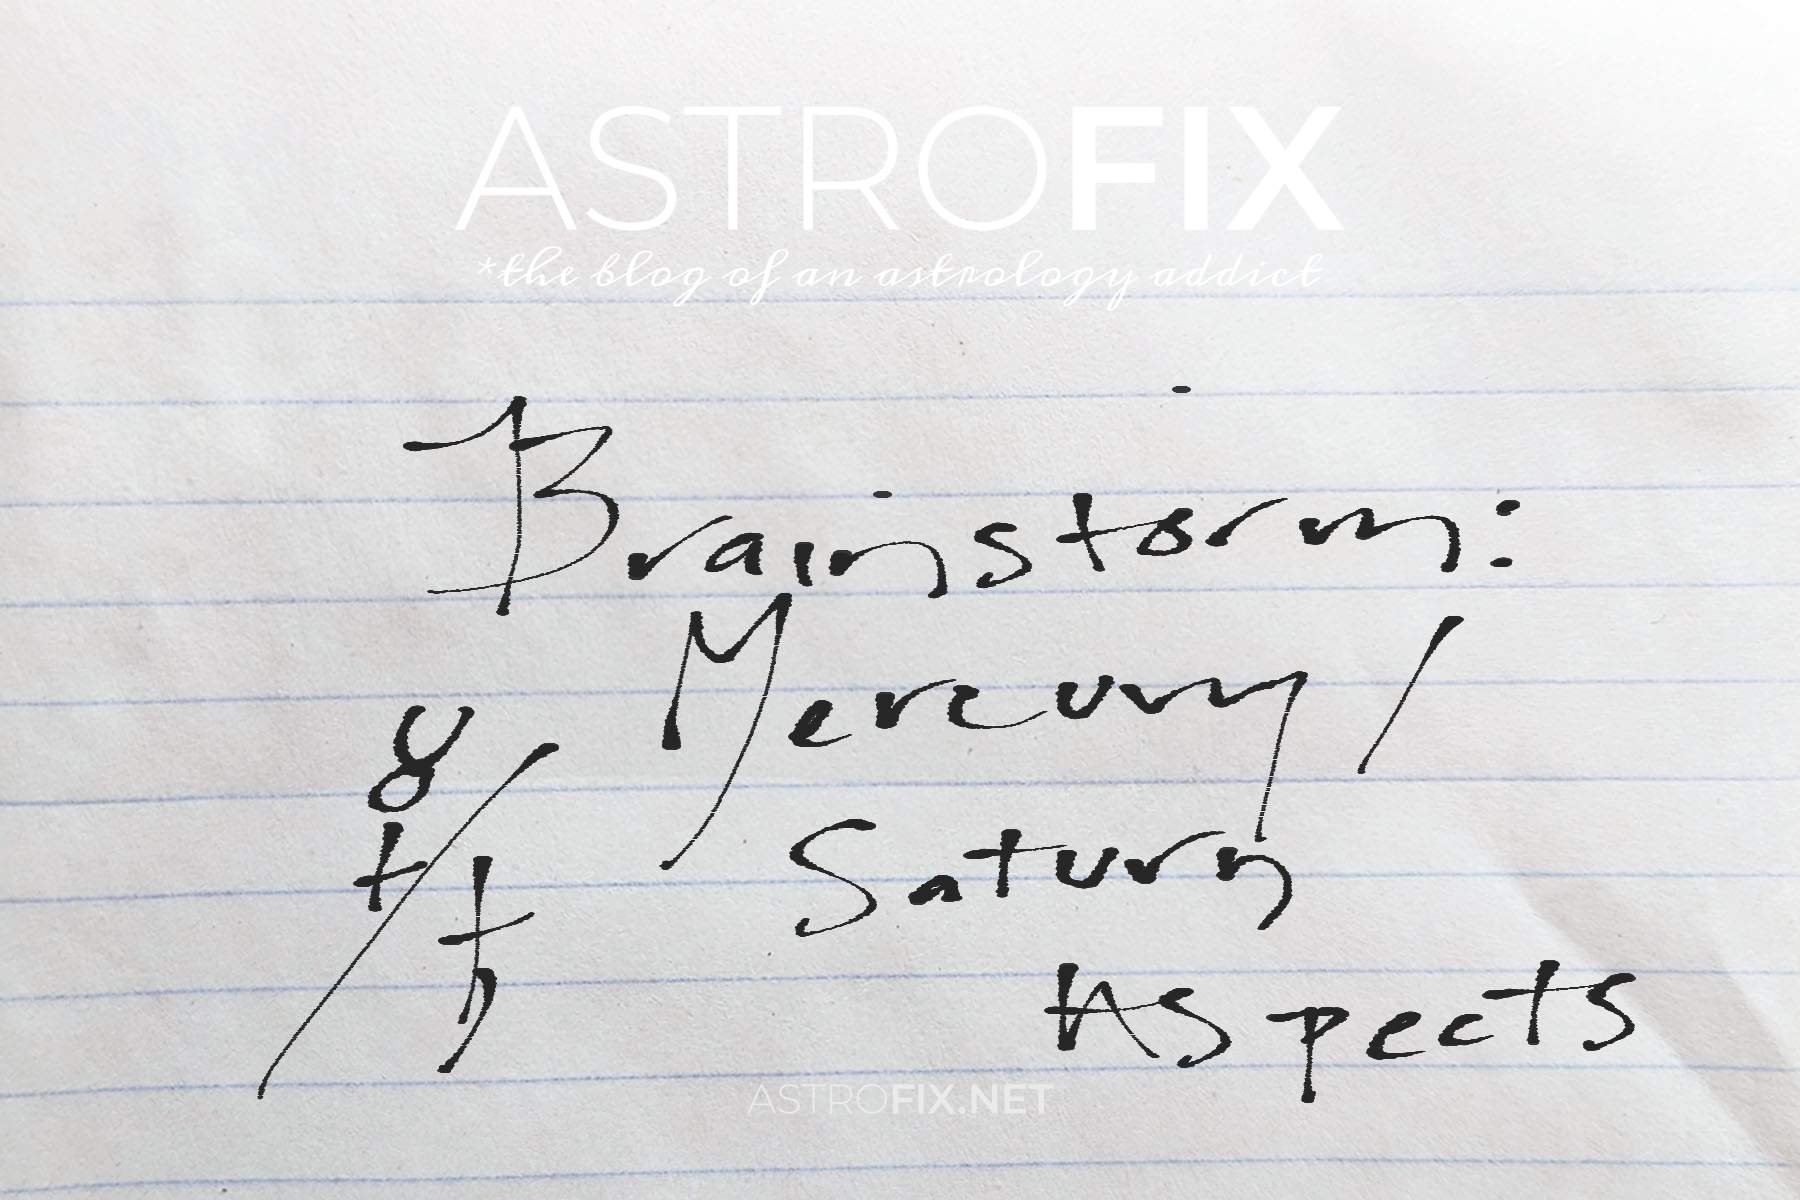 brainstorm-mercury-saturn-astrology-aspects